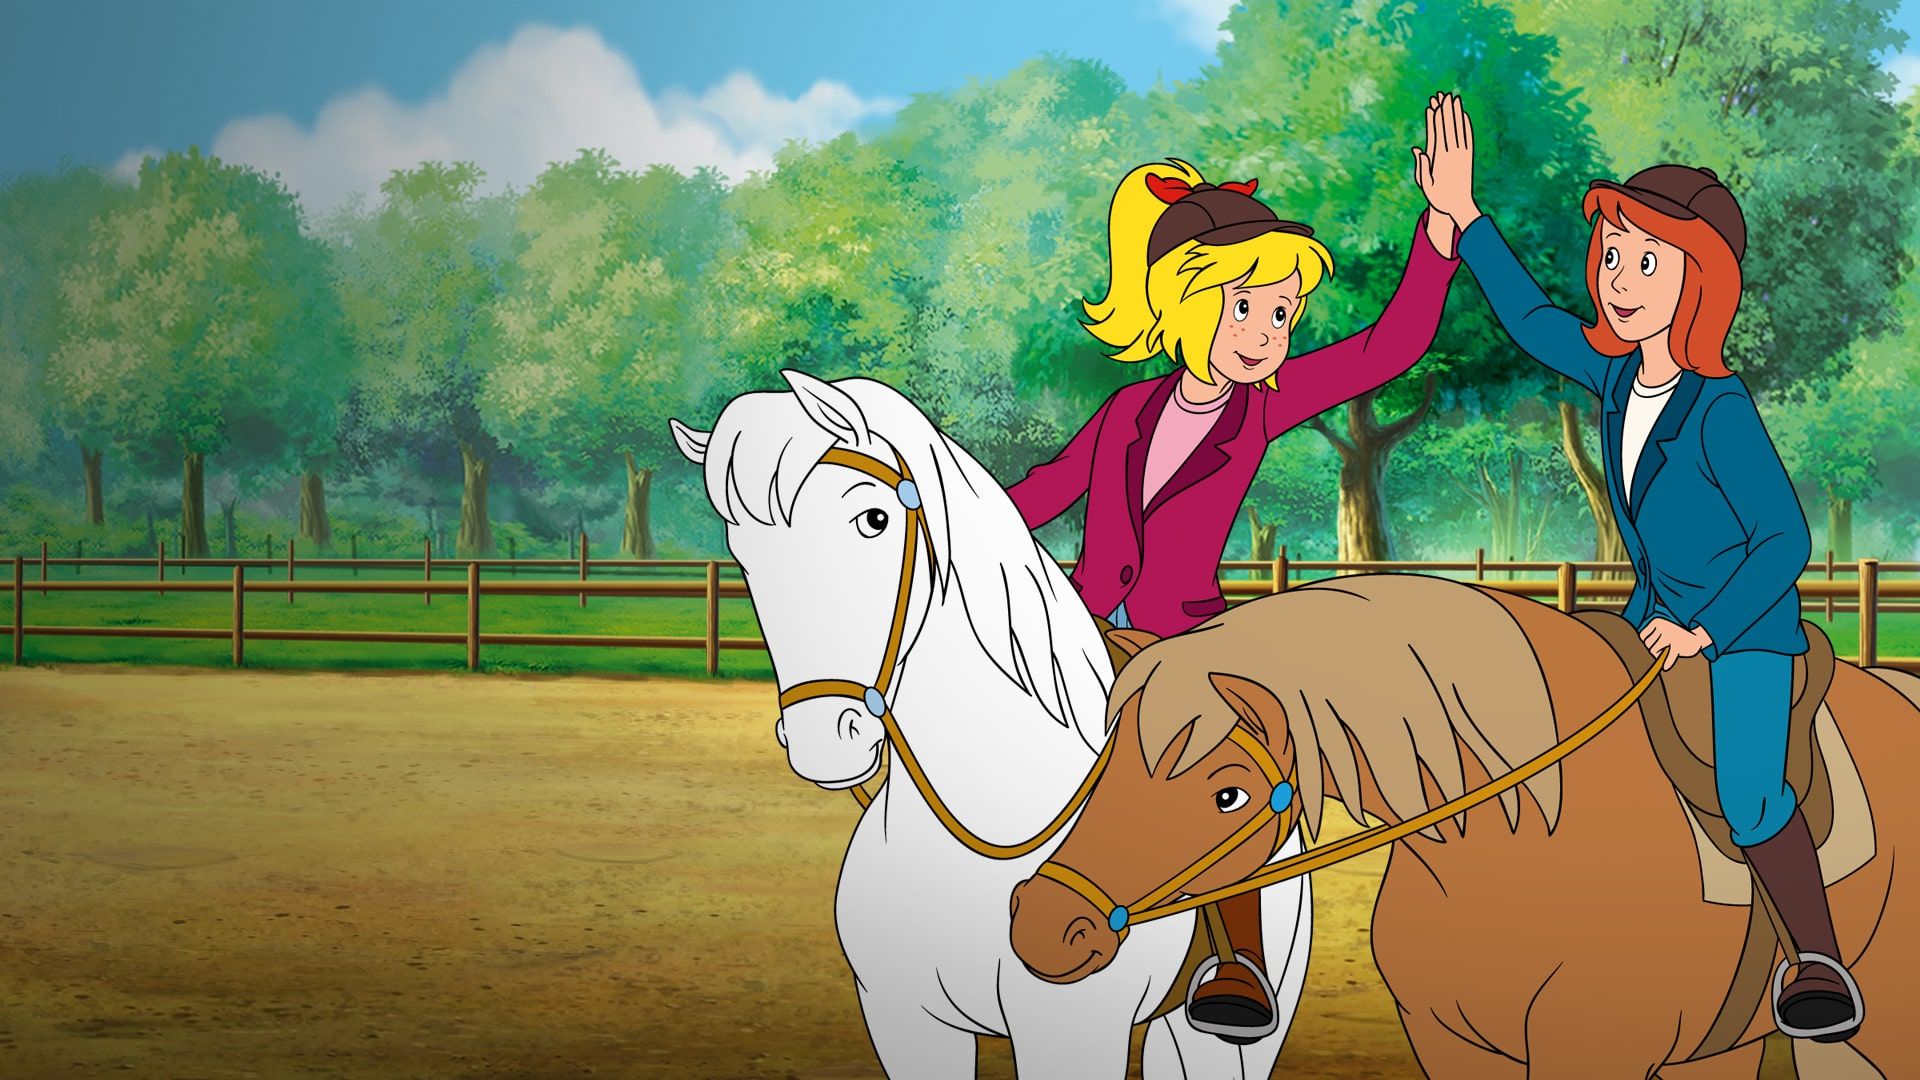 Bibi & Tina at the horse farm cover image